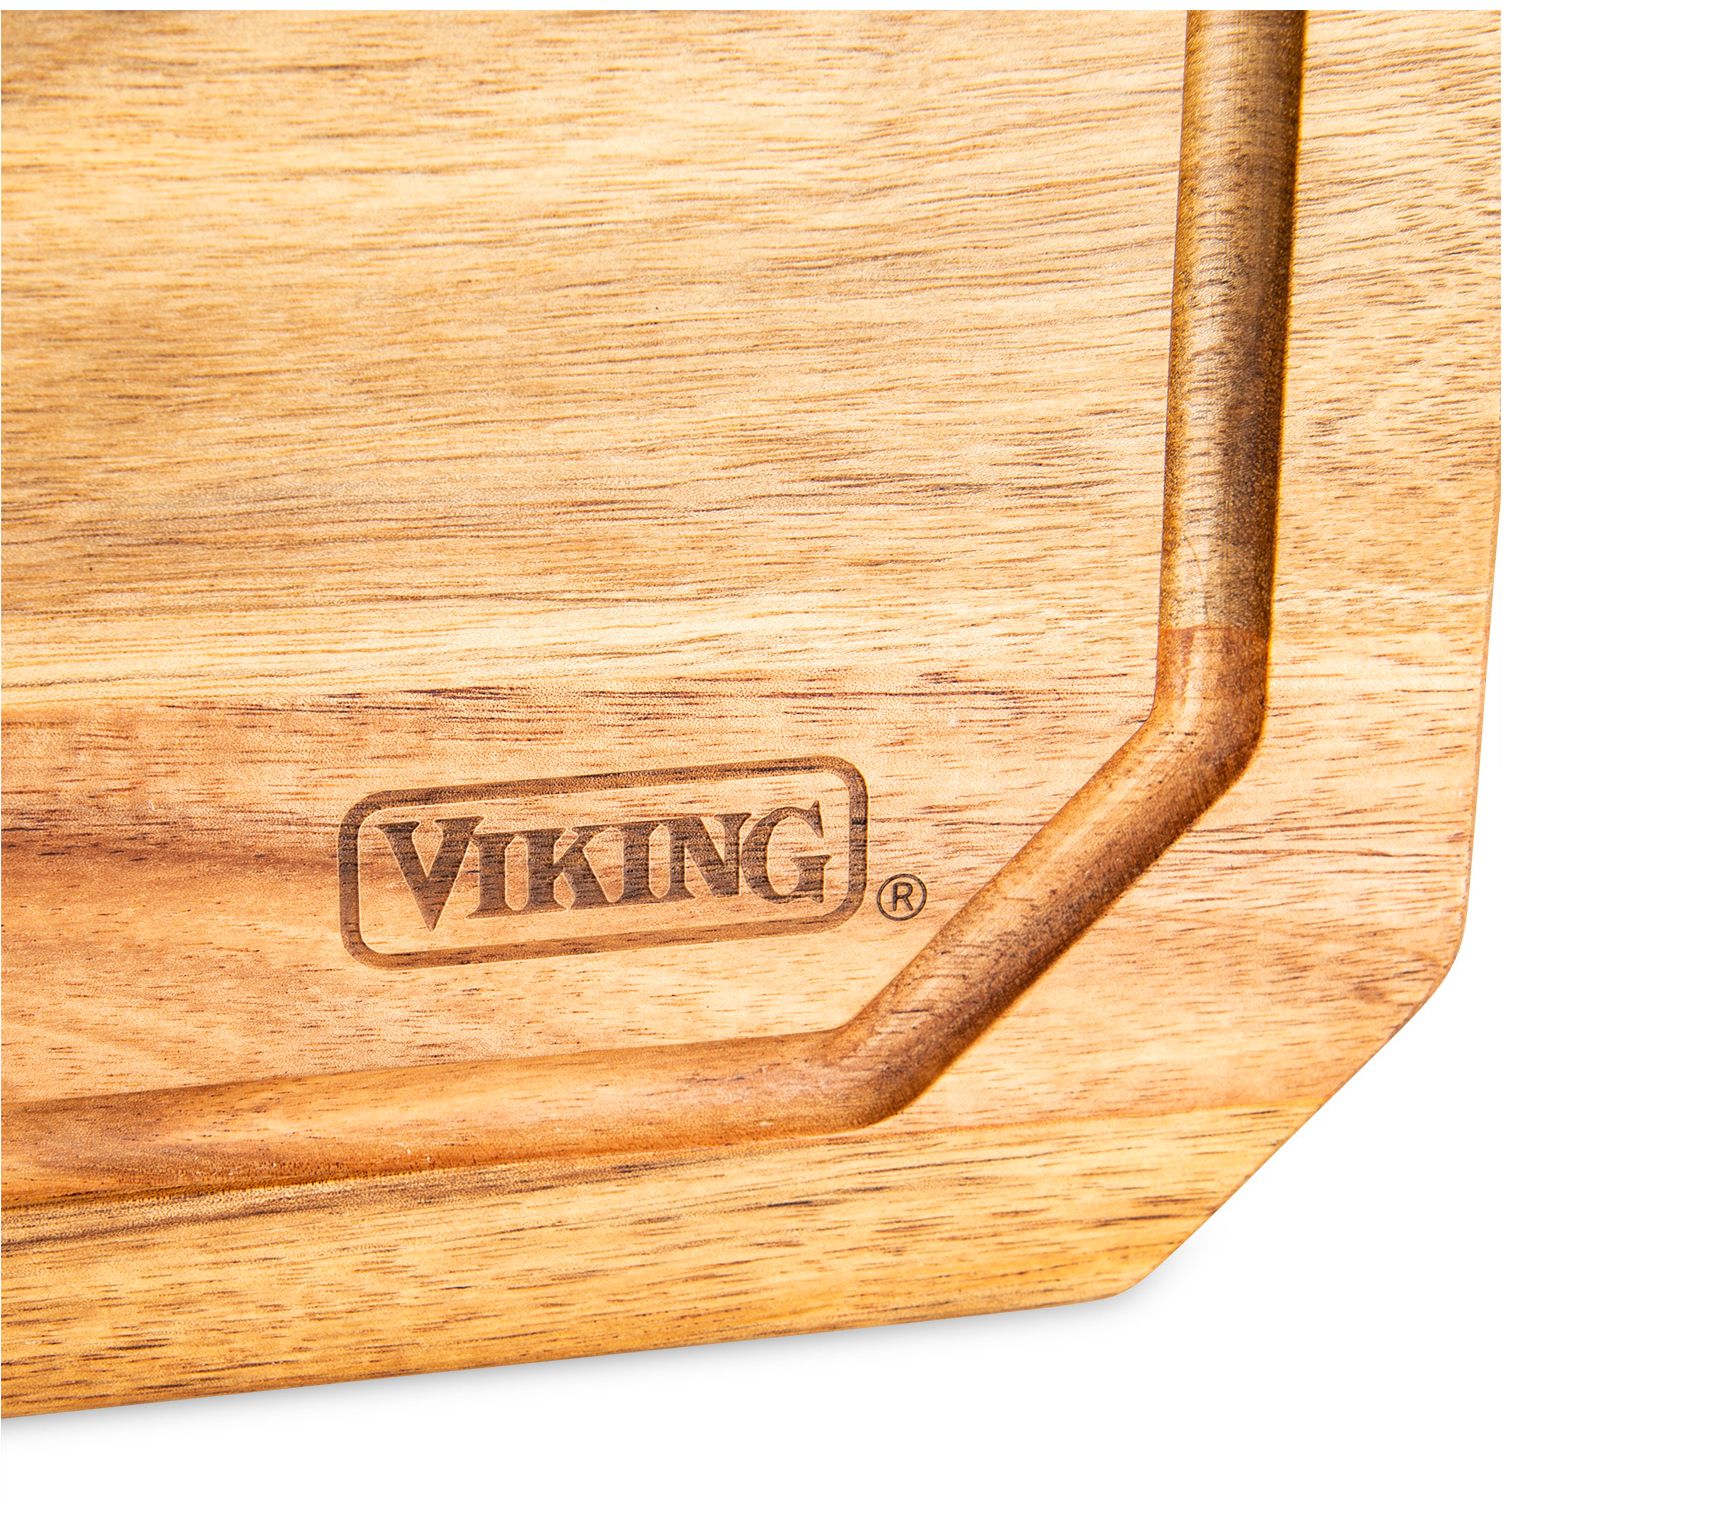 Viking Acacia 2-Piece Paddle and Cutting Board Serving Set